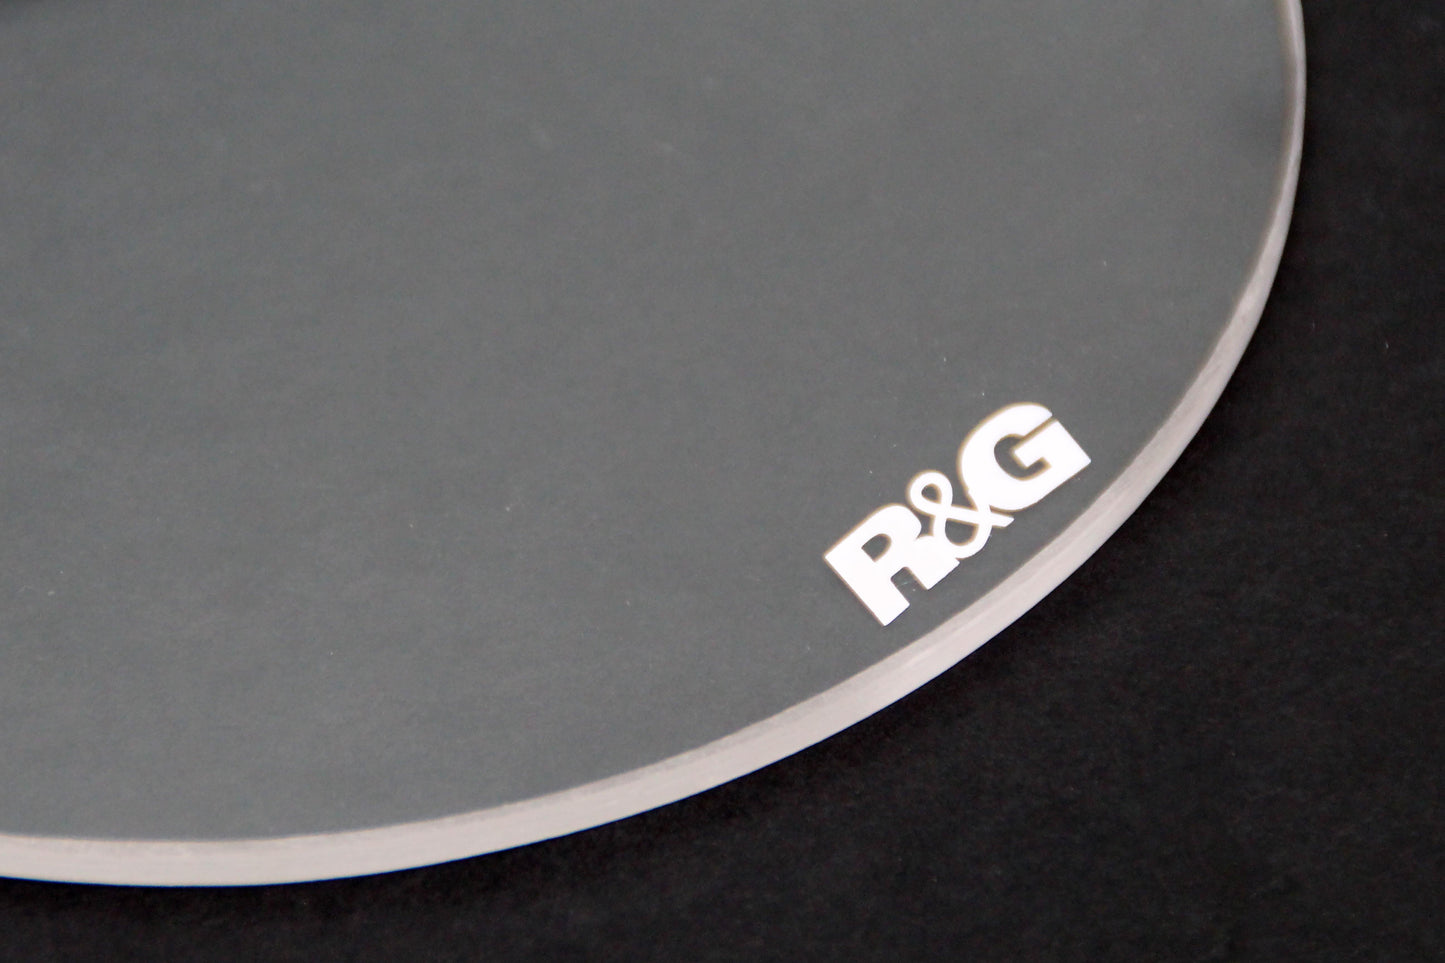 R&G Headlight Shields fits for Honda CB125R ('18) & CB300R ('18-) (HLS0078CL) - Durian Bikers